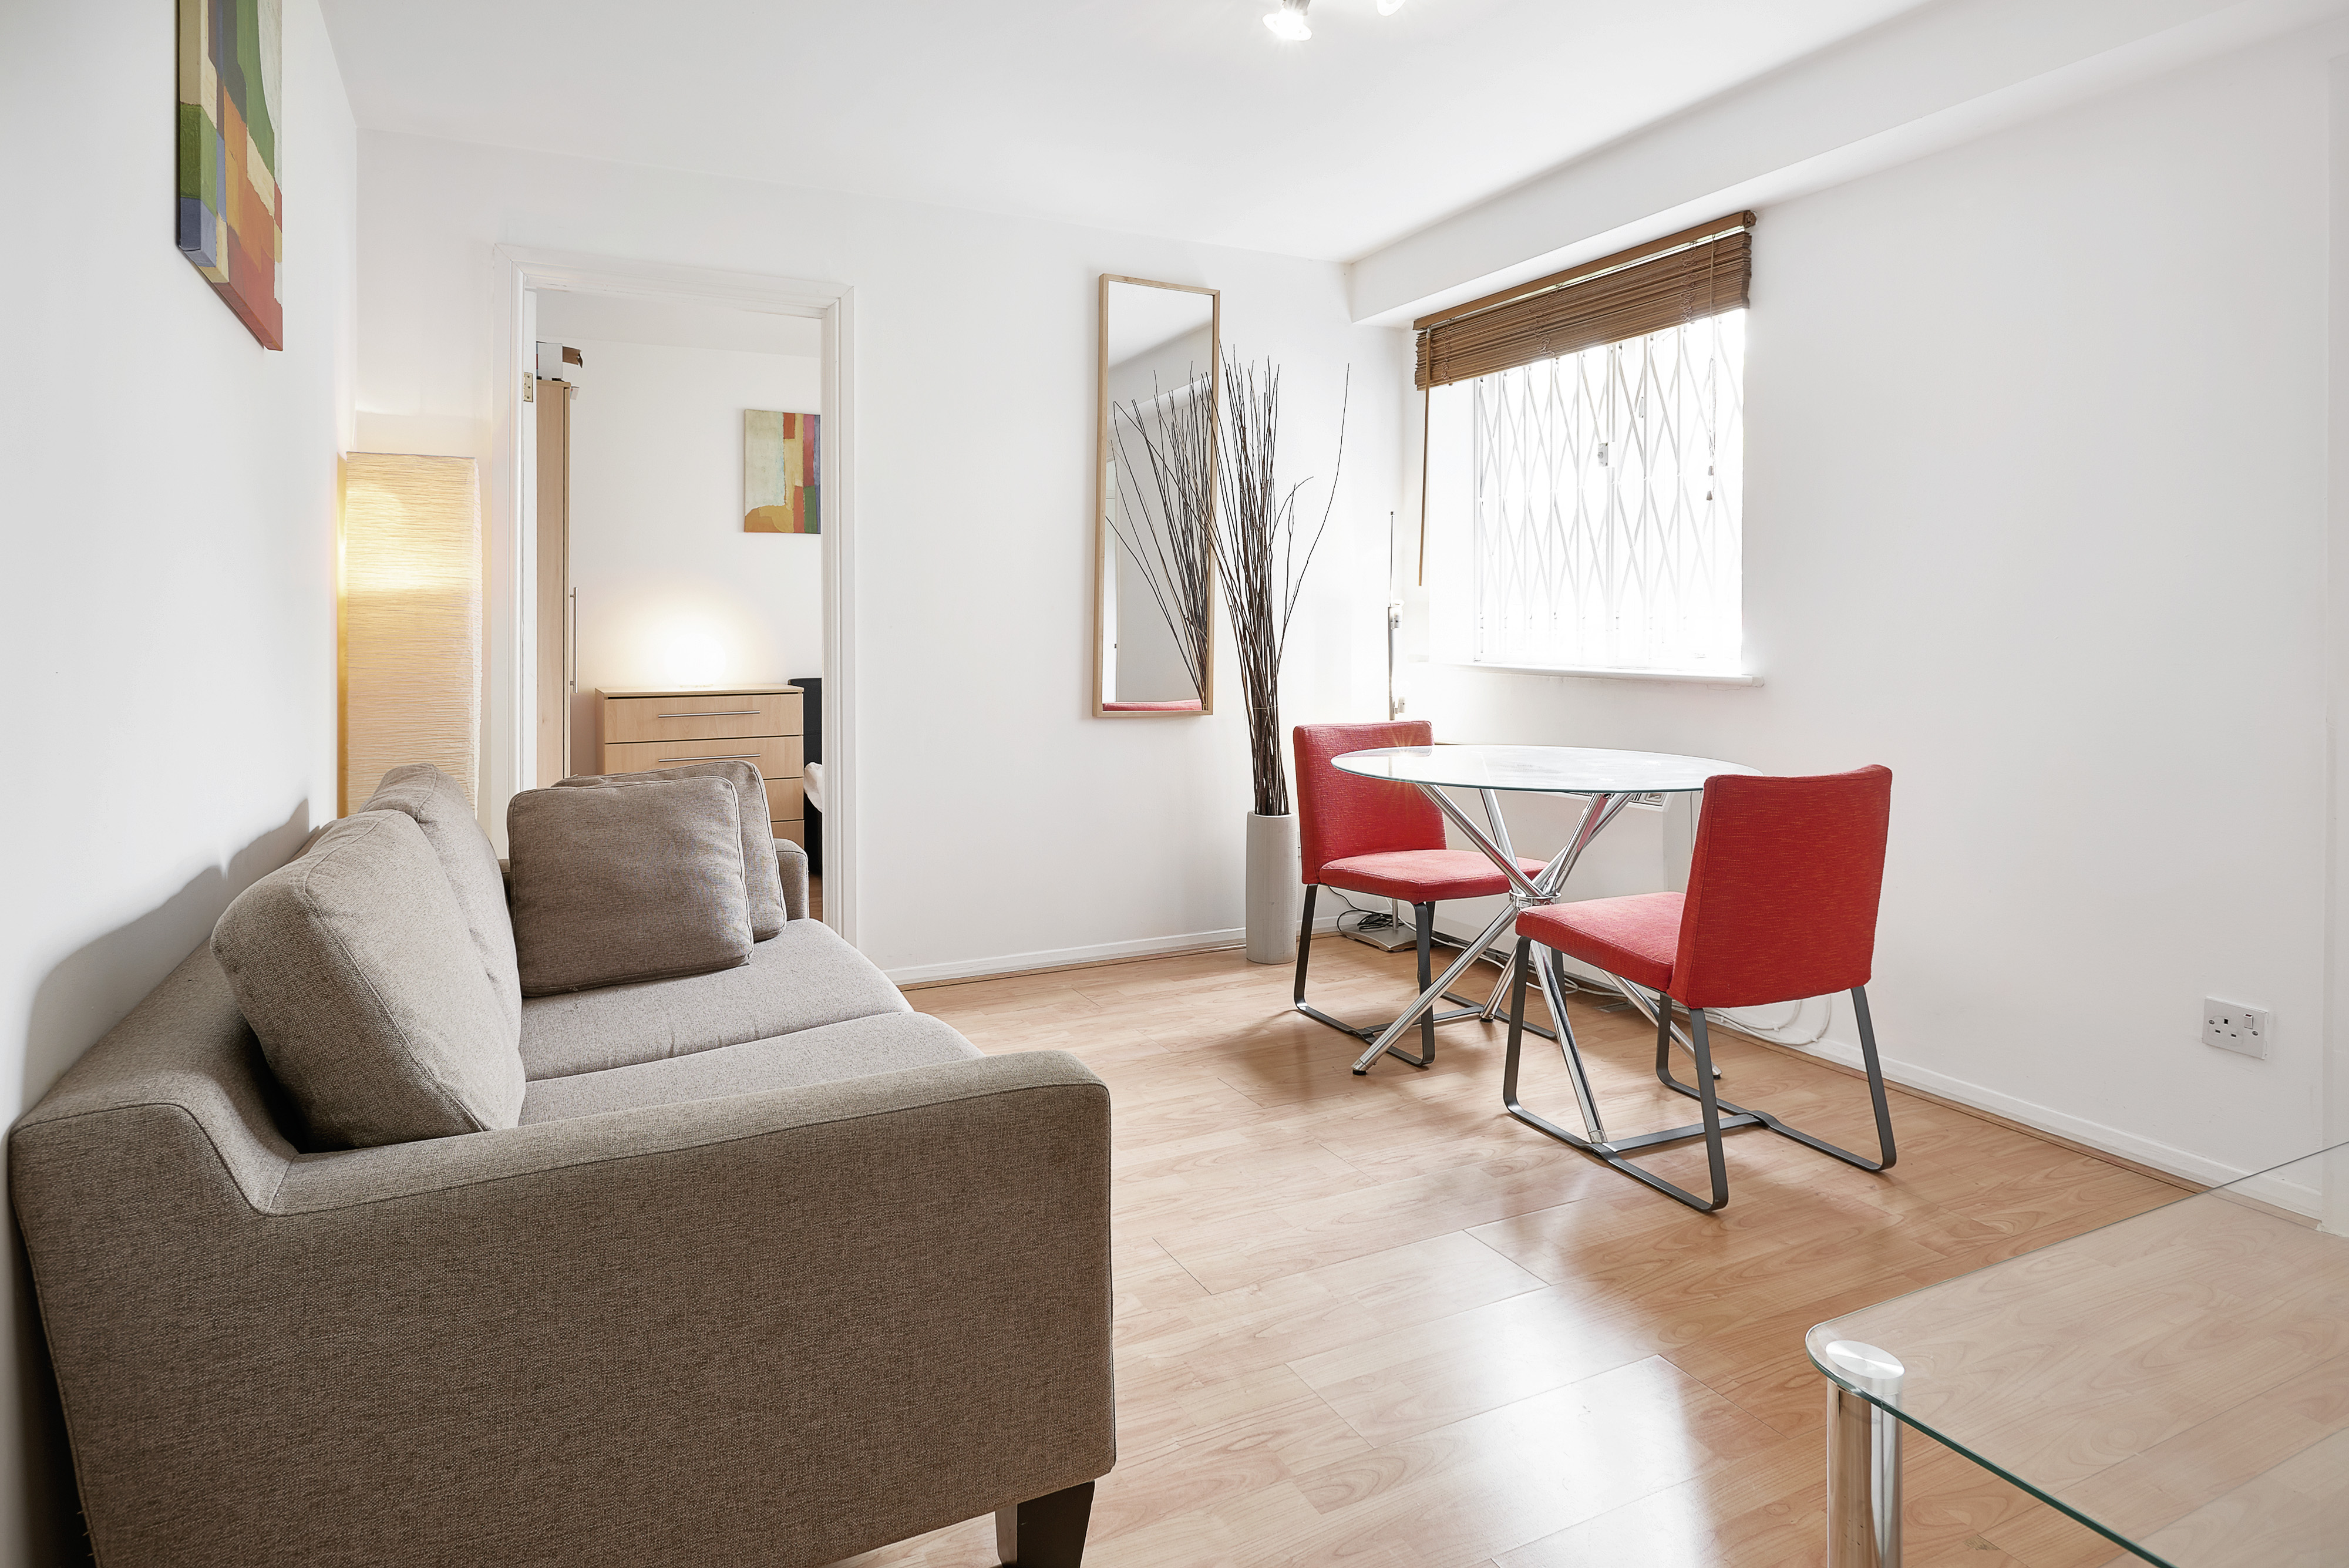 1 bed Apartment/Flat/Studio for rent in Poplar. From PropertyLoop